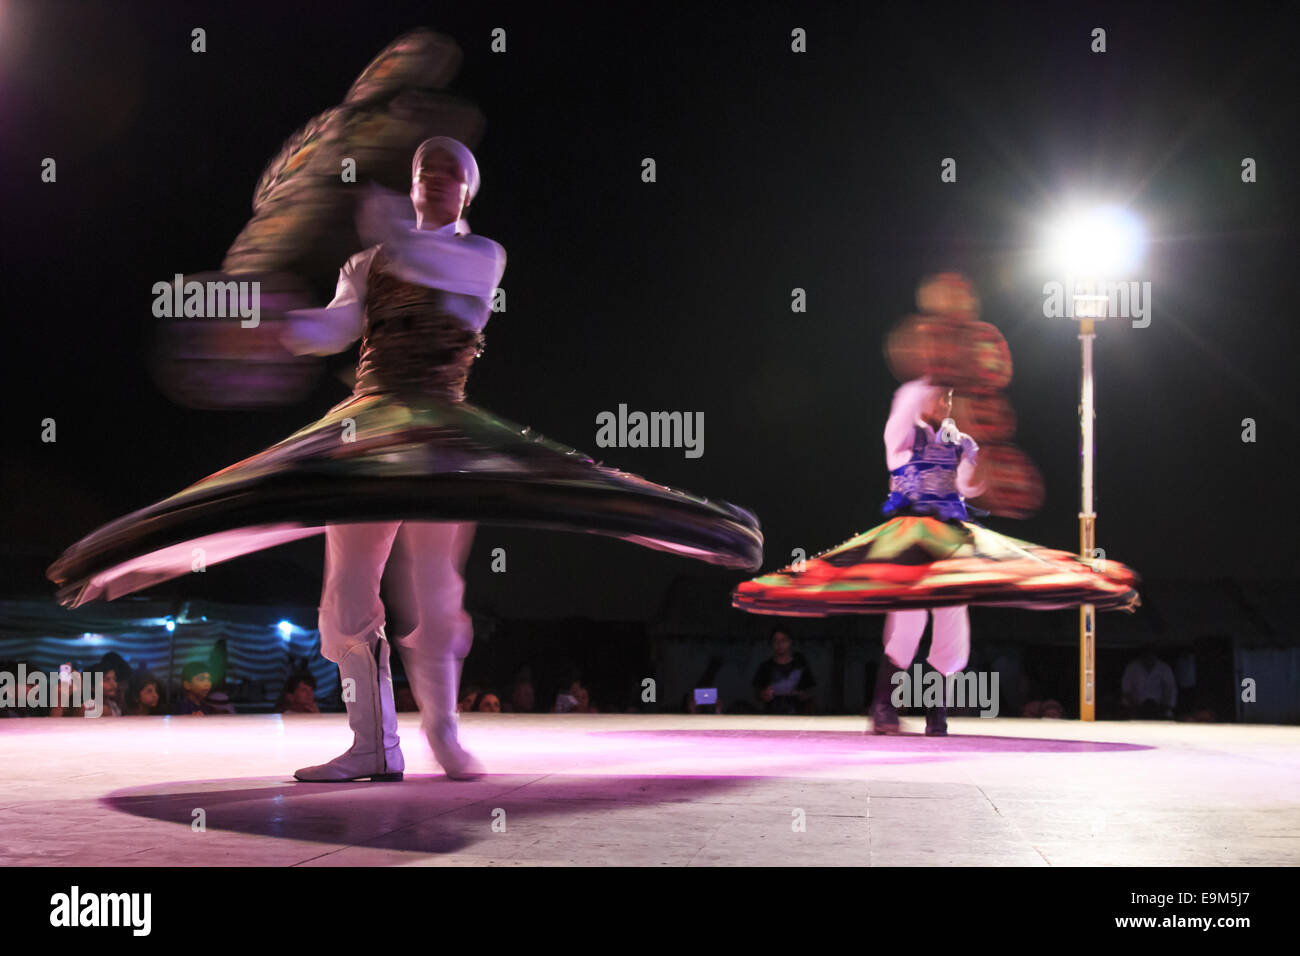 Dubai, United Arab Emirates - October 9, 2014: Arab dancer performing a 'turning dance' Stock Photo